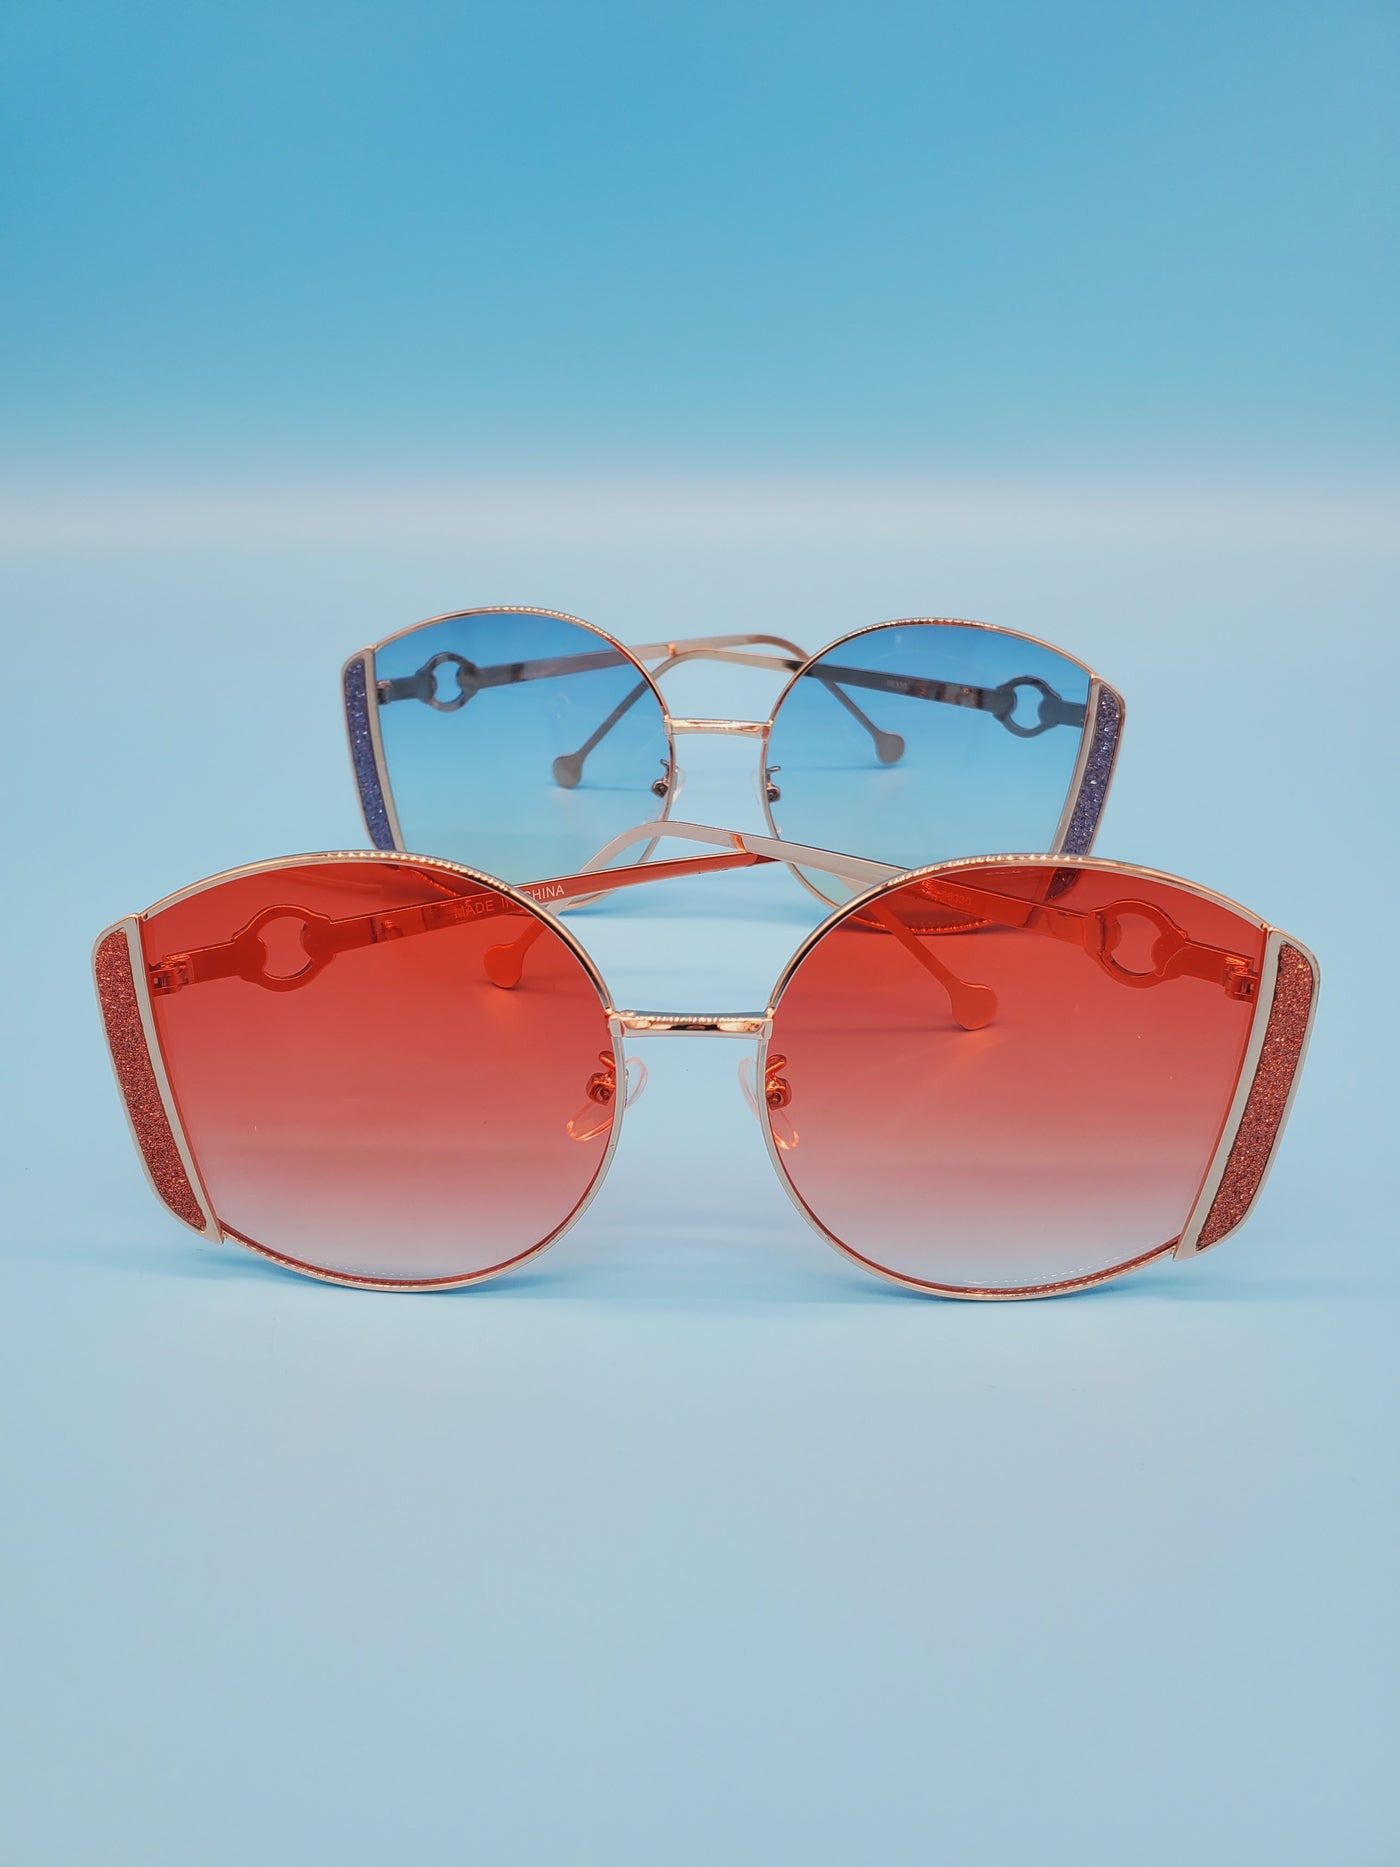 Unique Frame Stylish Sunglasses